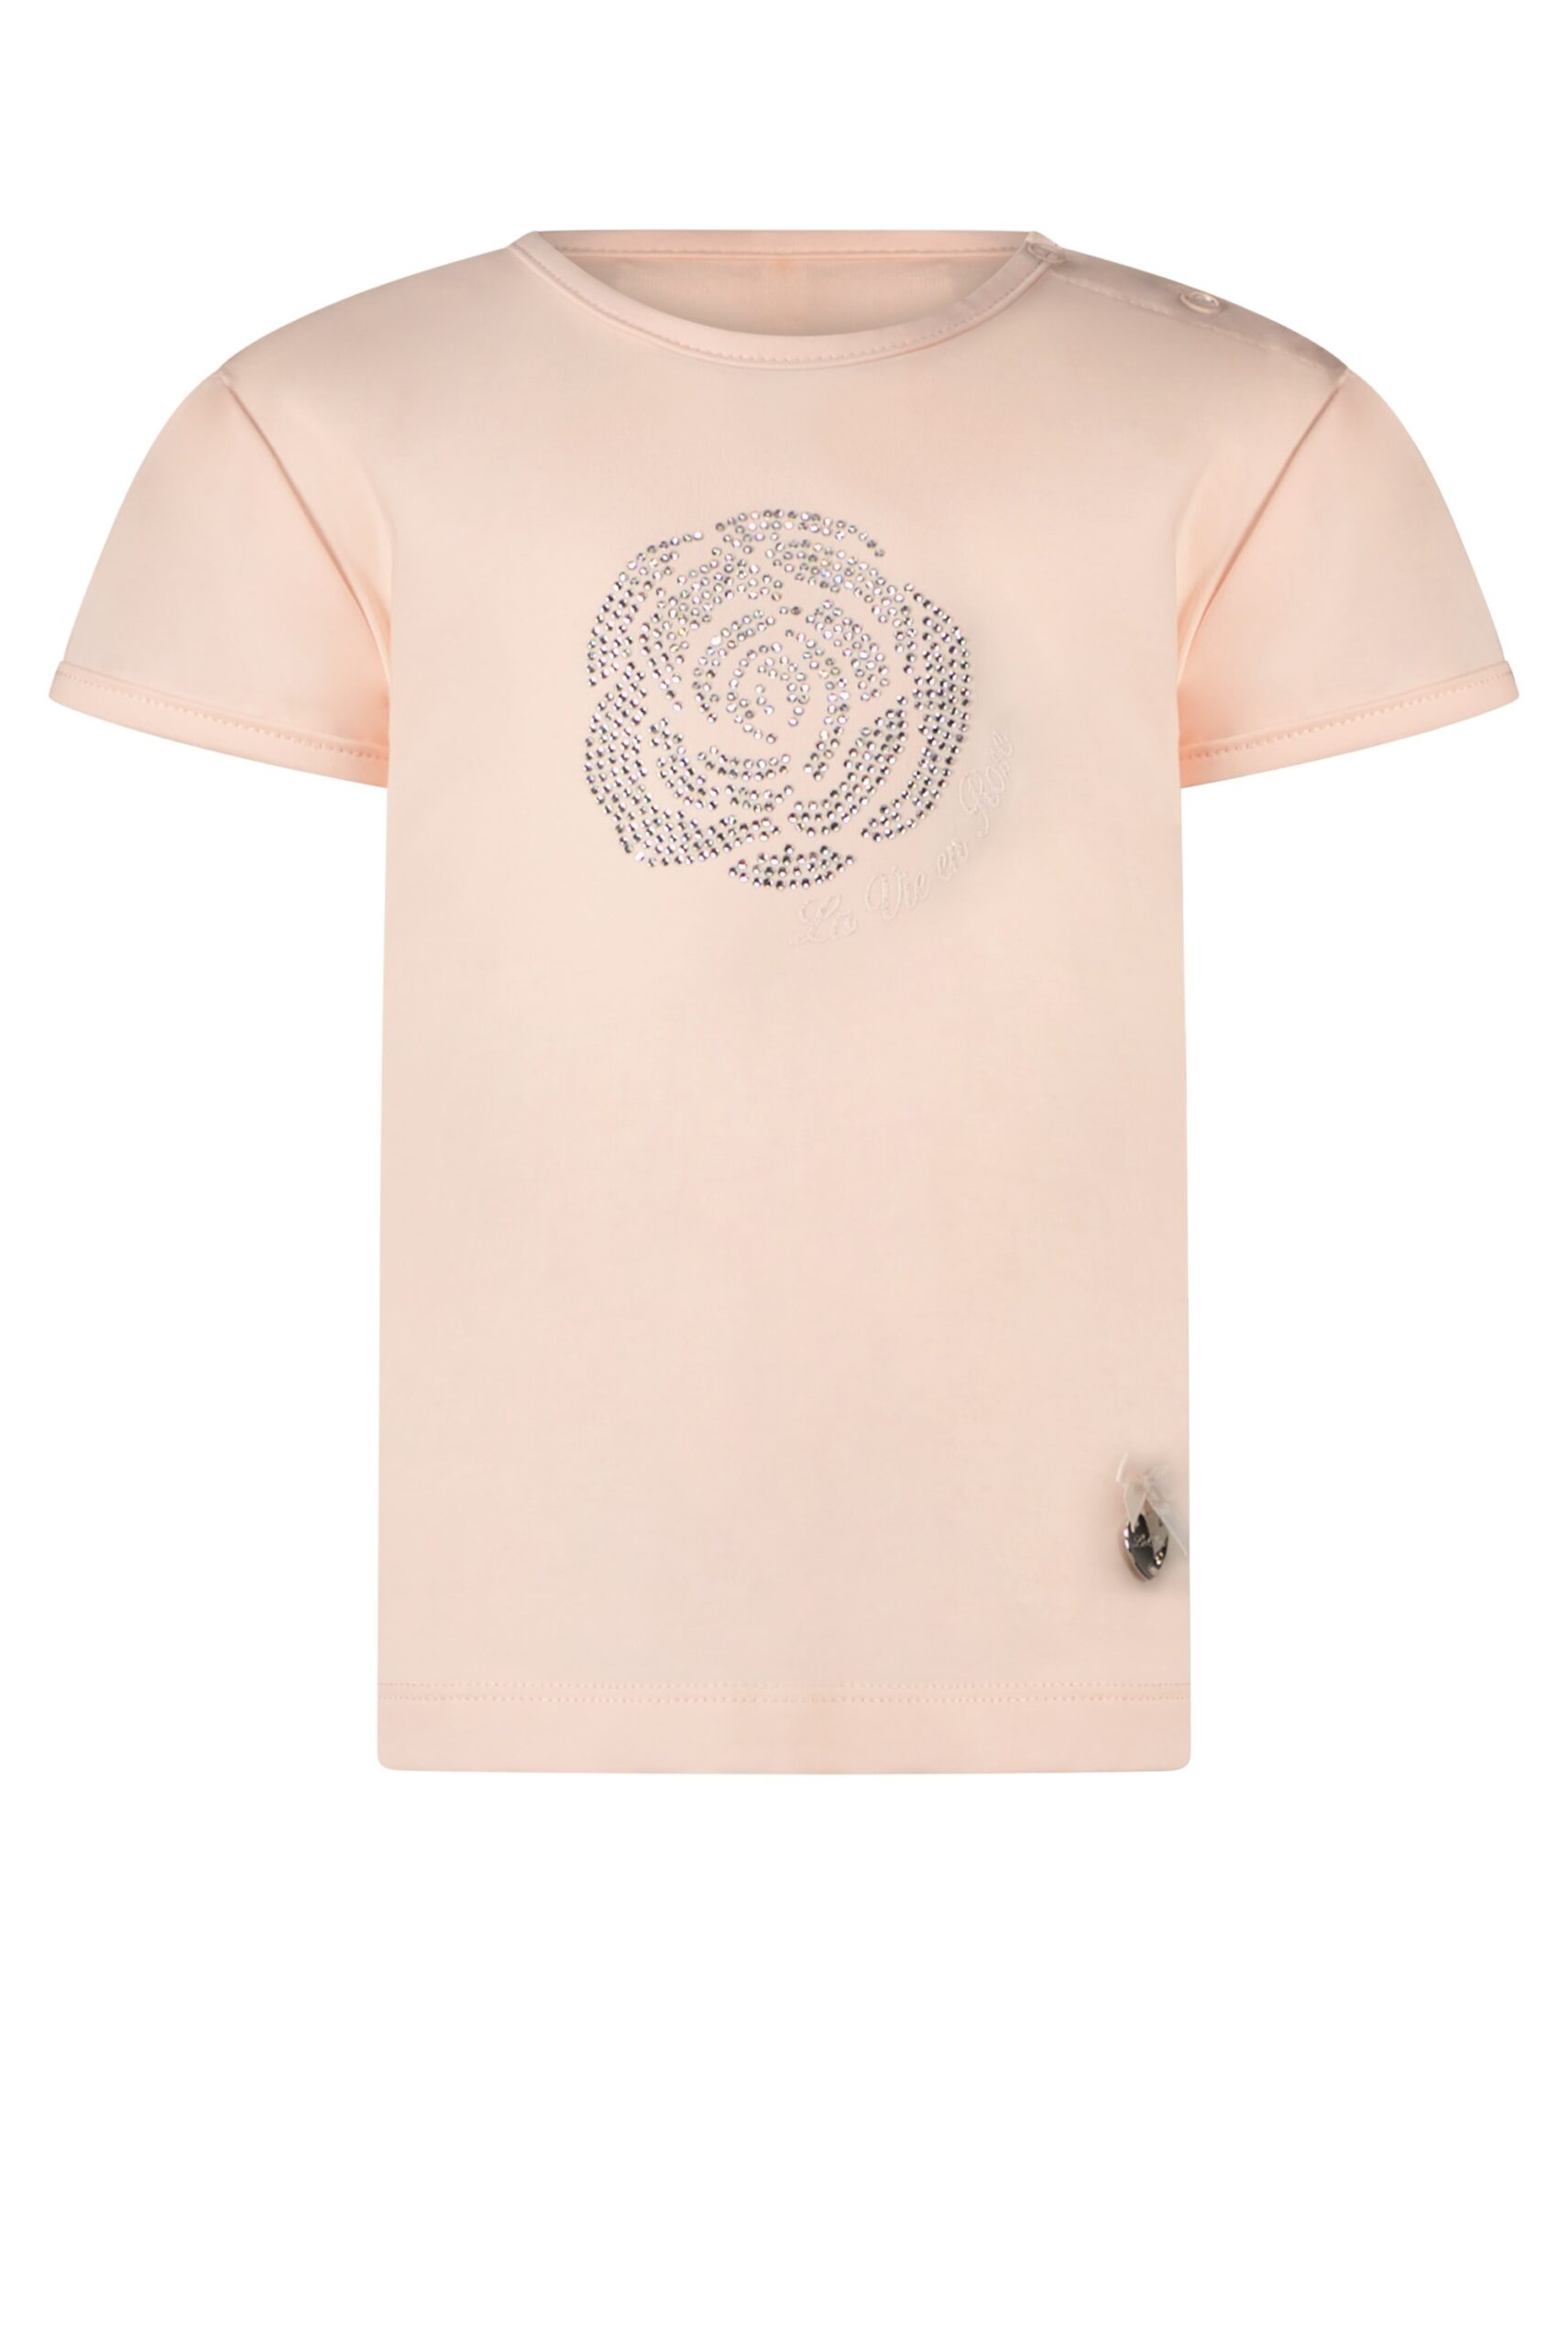 Noki La Vie en Rose T-shirt